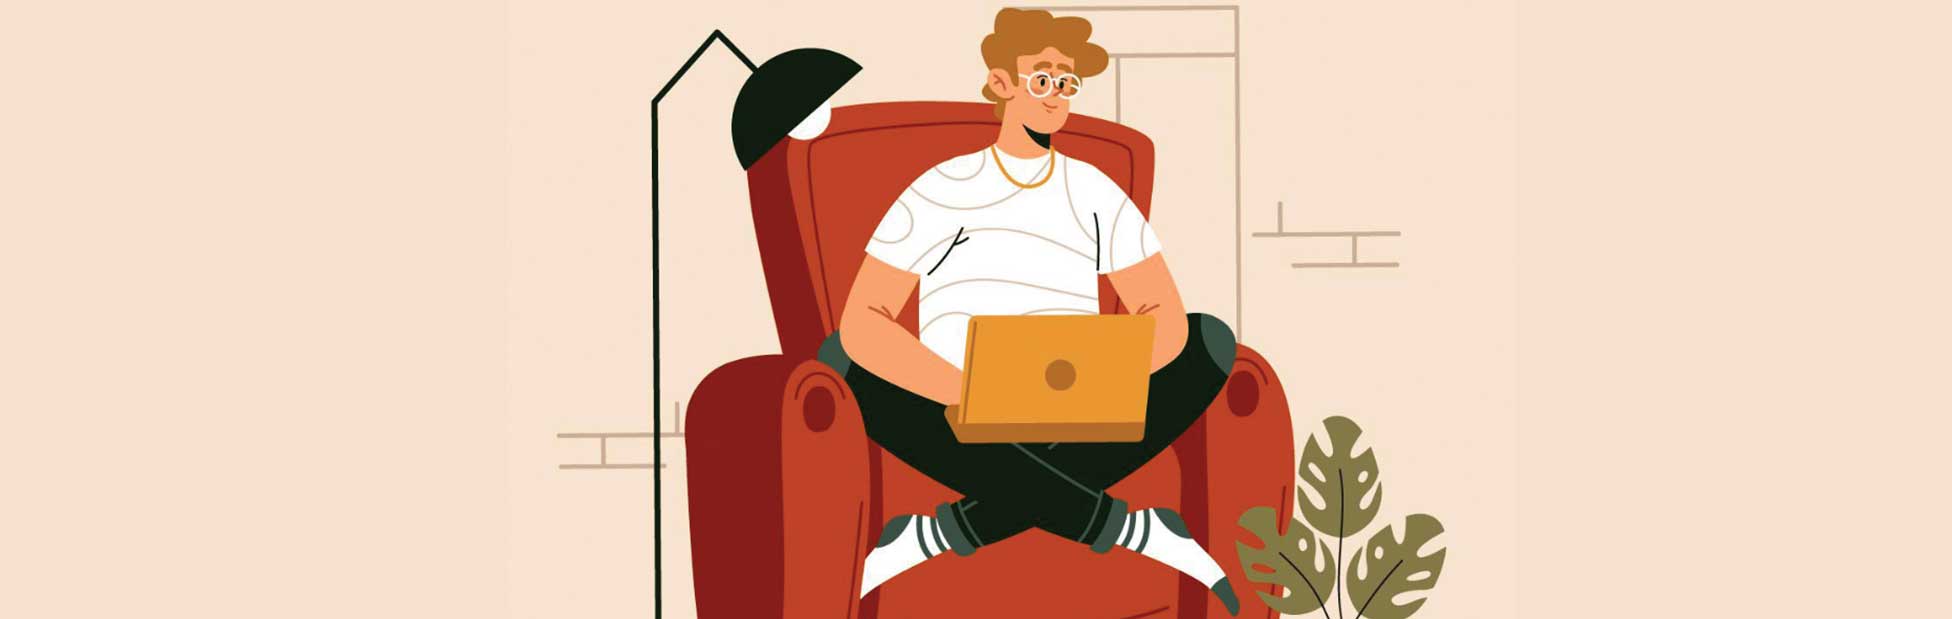 cartoon image of a man on a laptop